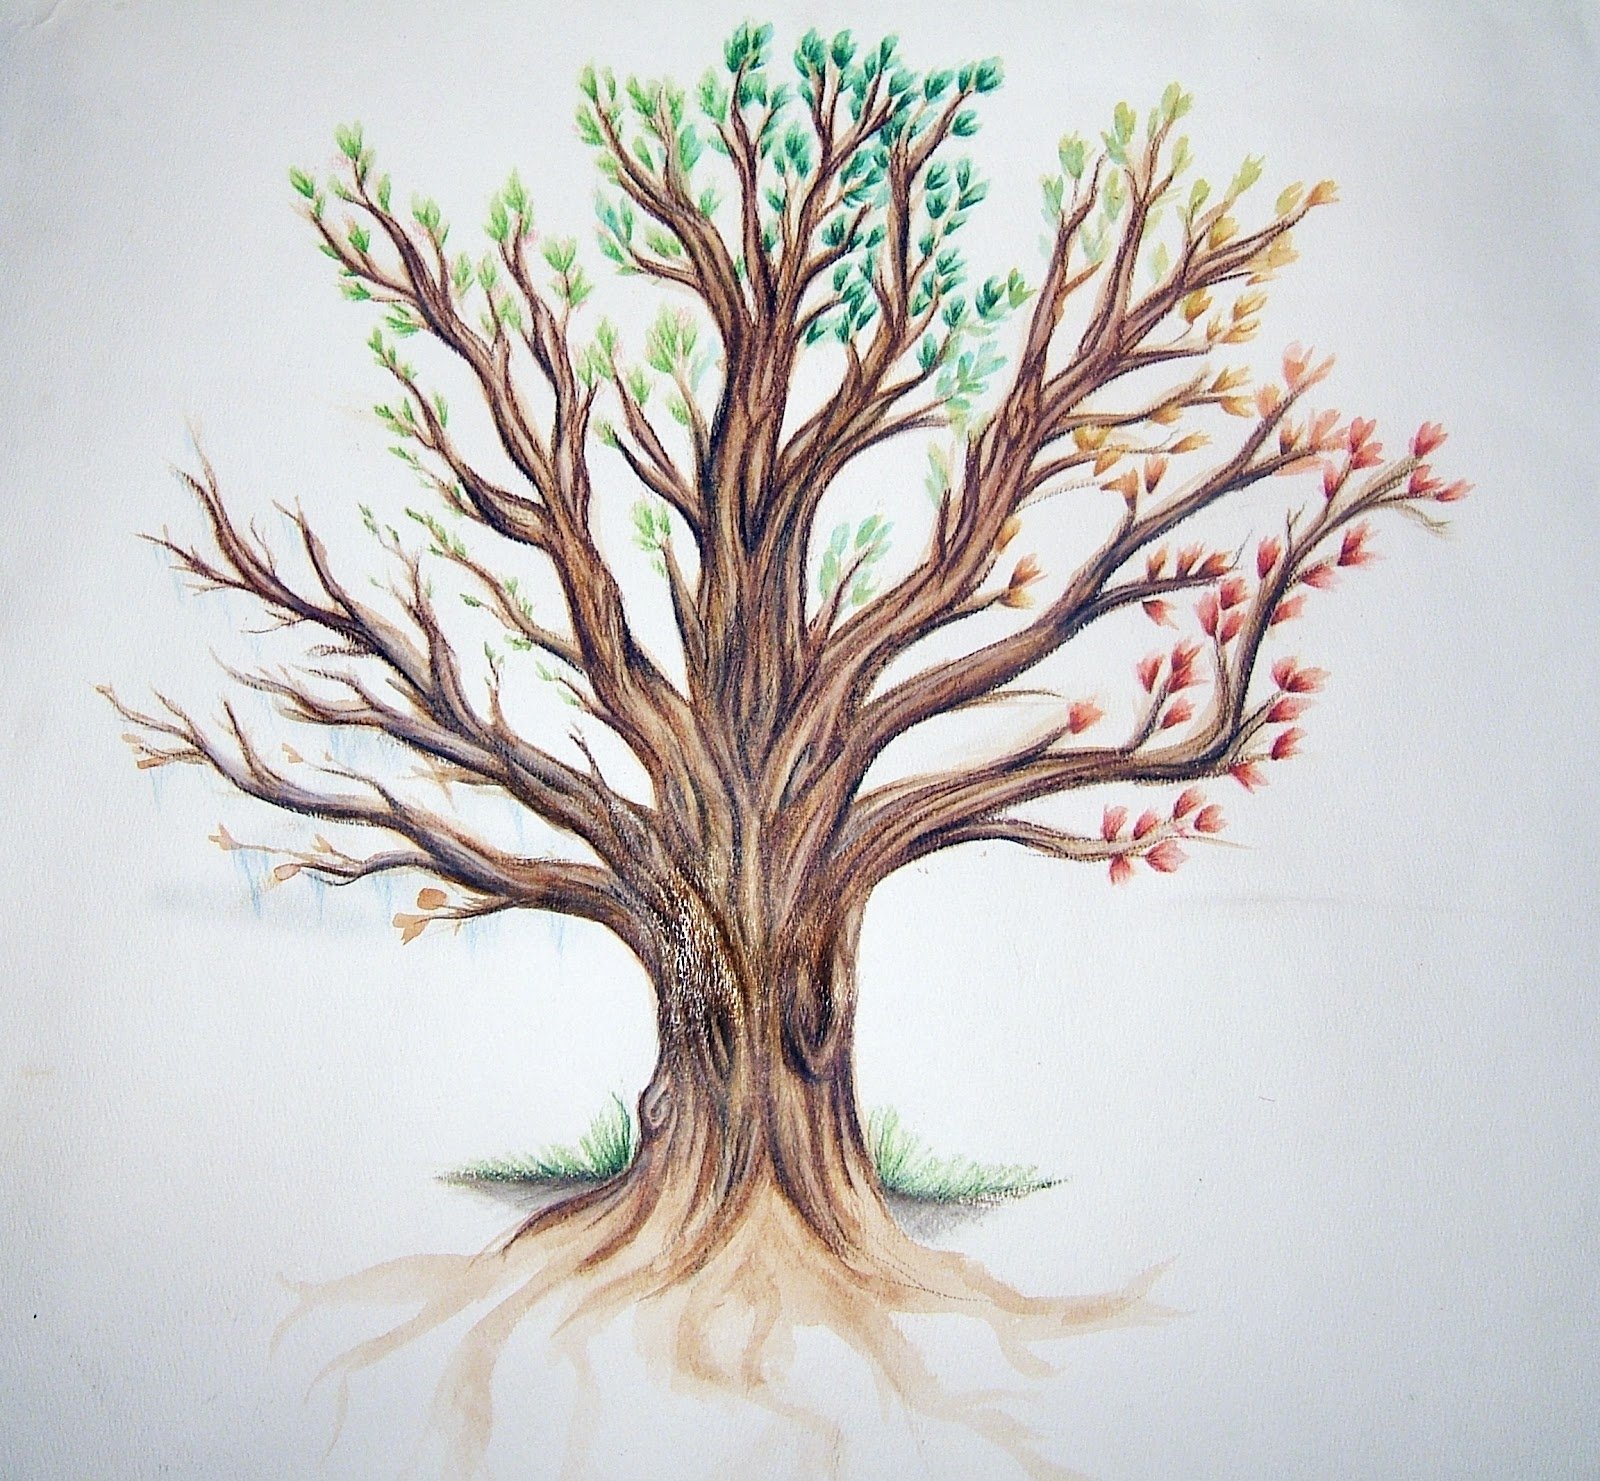 Включи tree. Нарисовать дерево. Дерево цветными карандашами. Стилизация дерева.